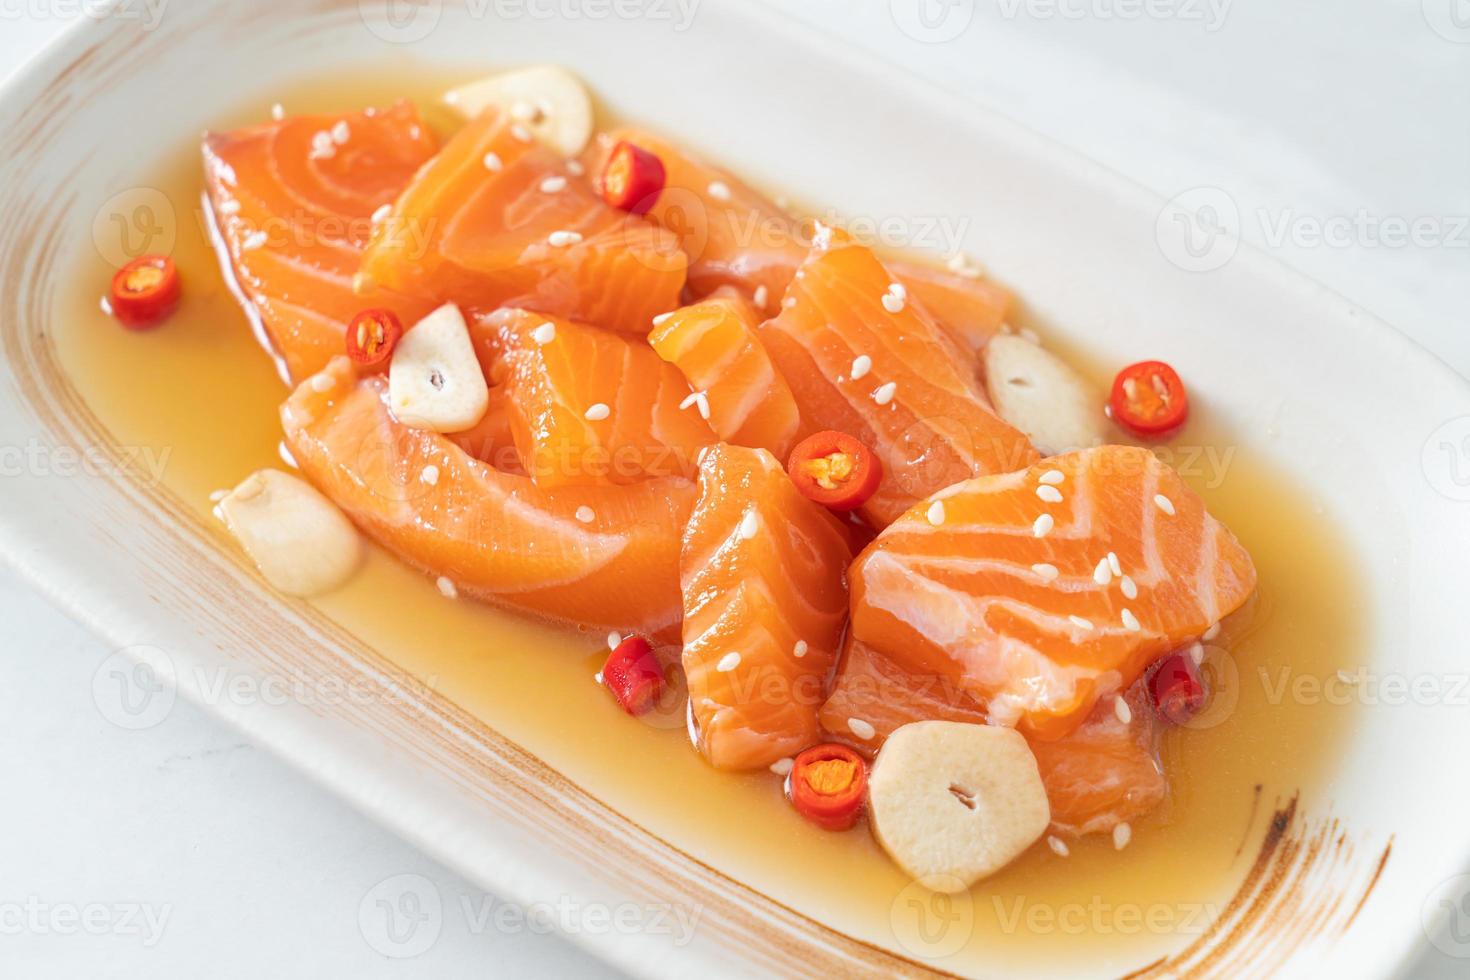 salmone fresco crudo marinato shoyu o salsa di soia marinata al salmone foto